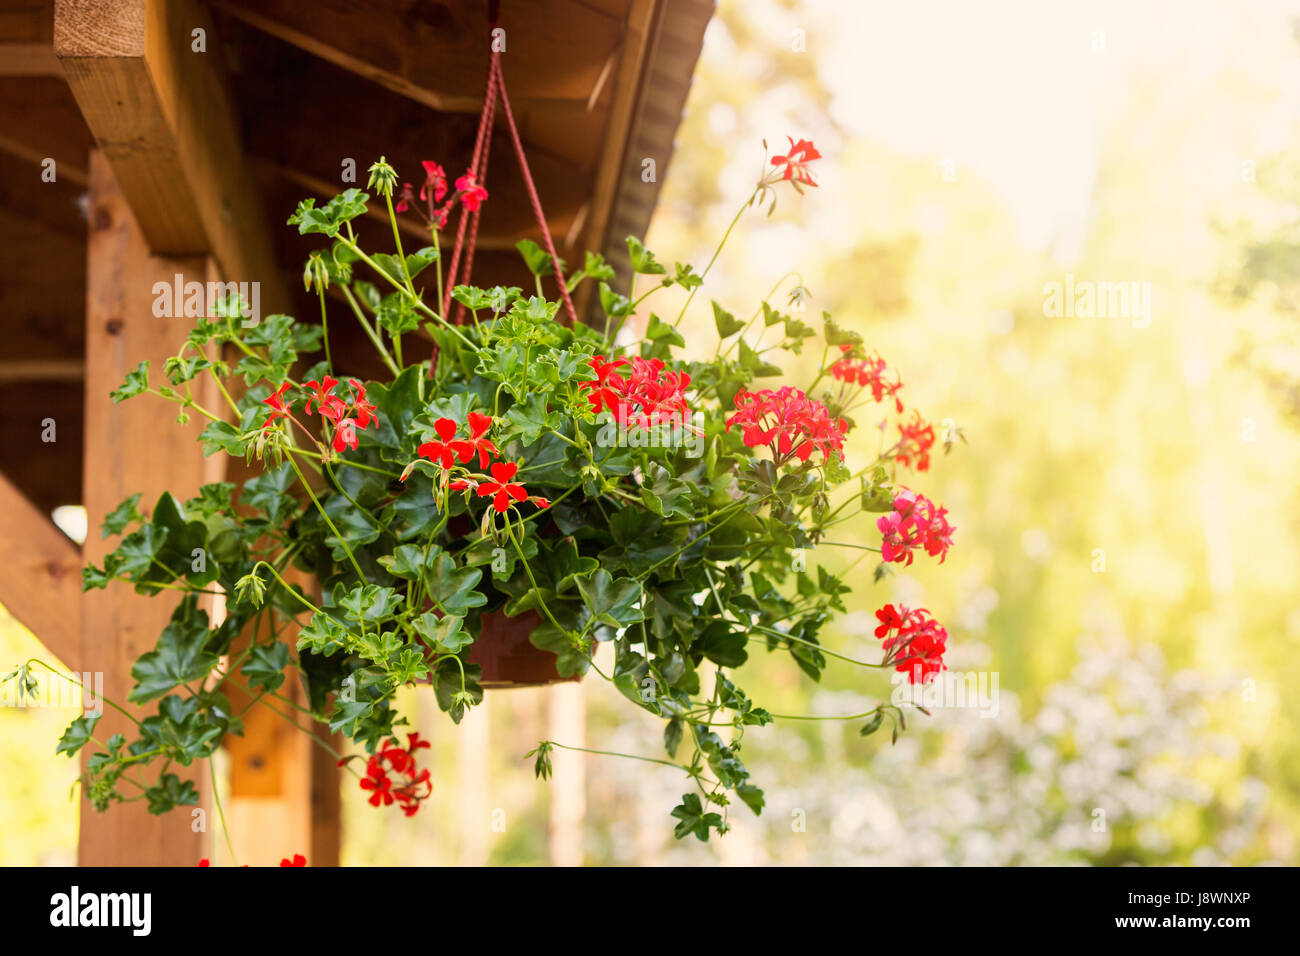 red pelargonium hanging in bower Stock Photo